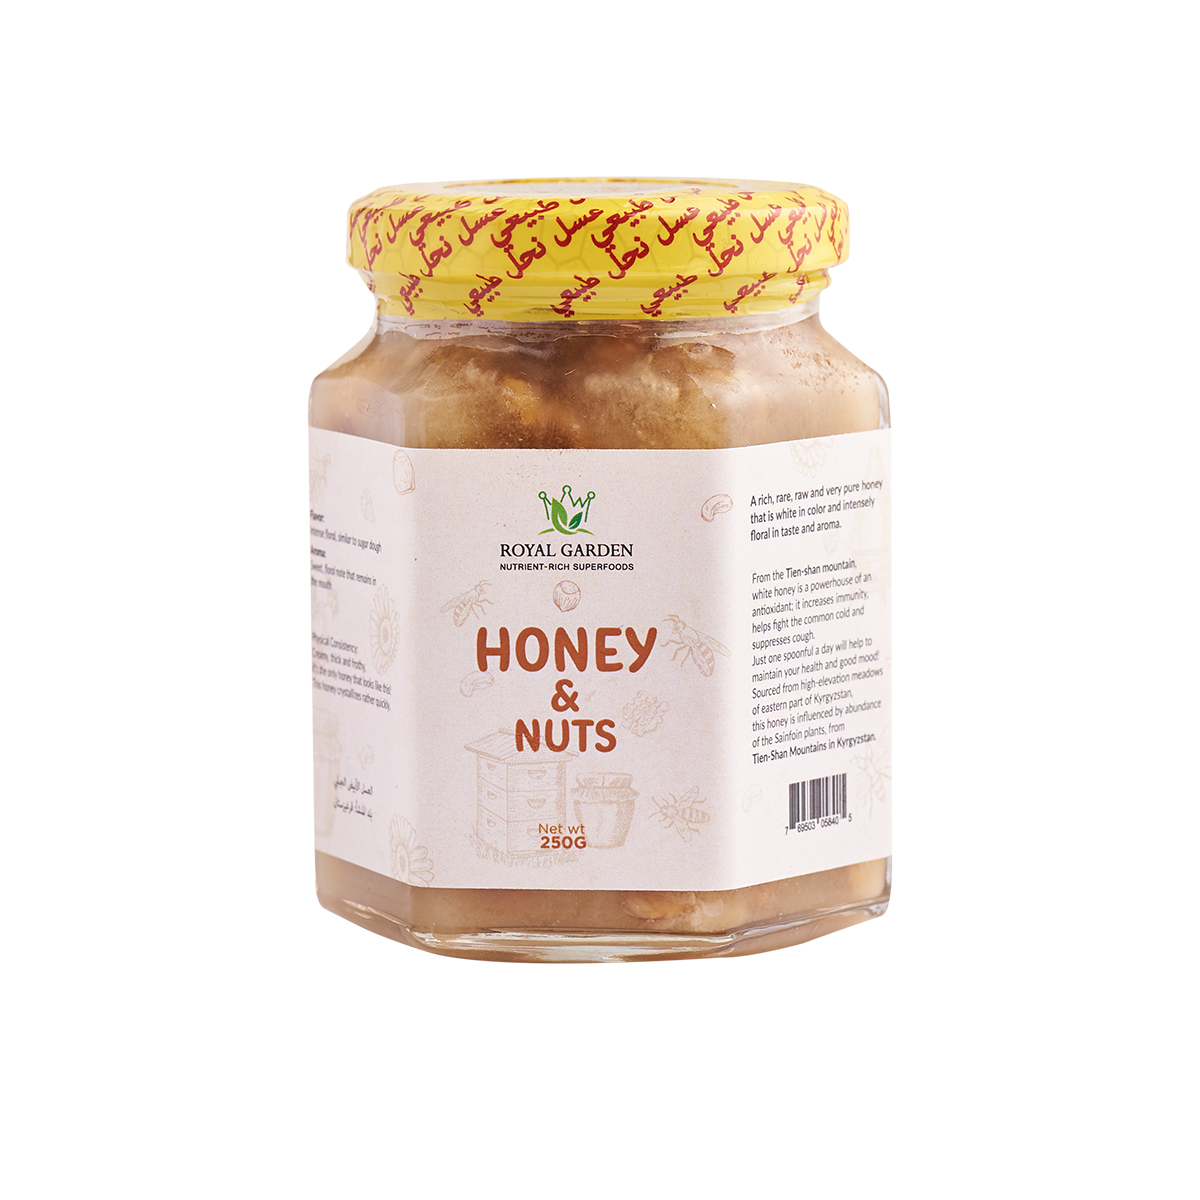 Honey & Nuts